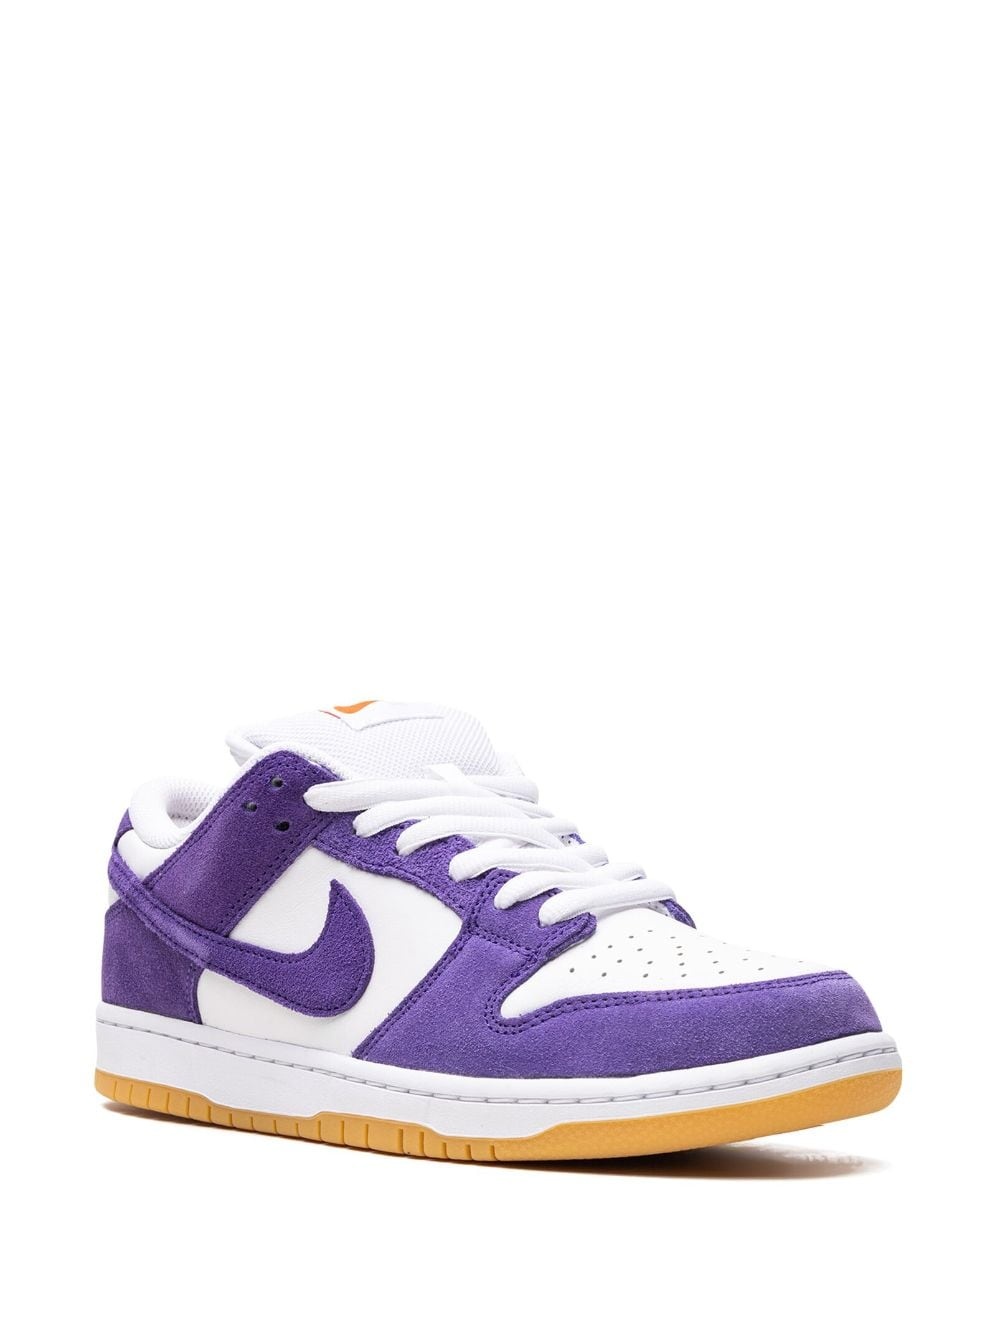 SB Dunk Low Pro ISO "Court Purple" sneakers - 2